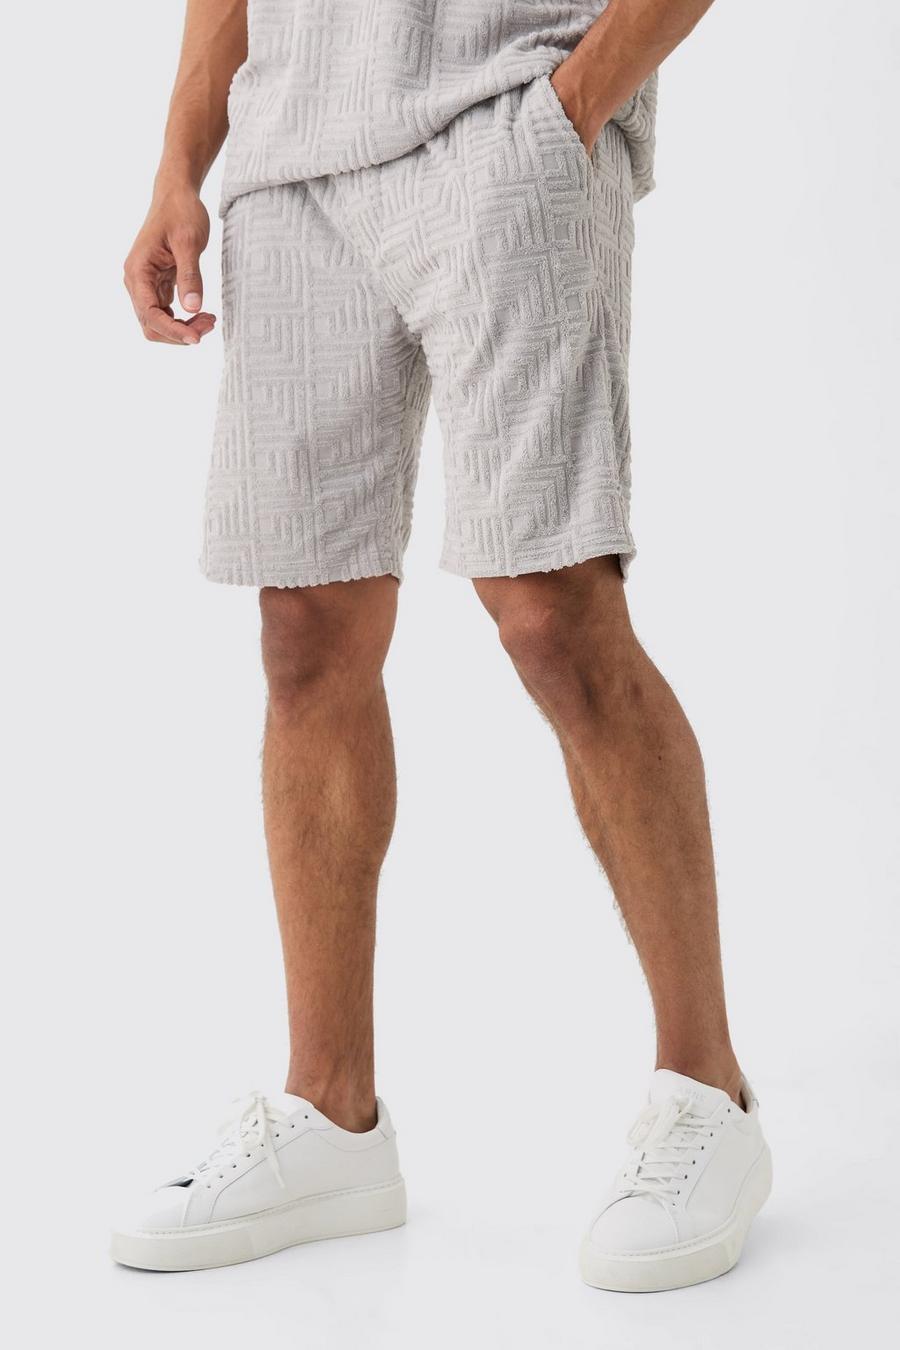 Pantalón corto holgado de felpa jacquard con estampado geométrico, Light grey